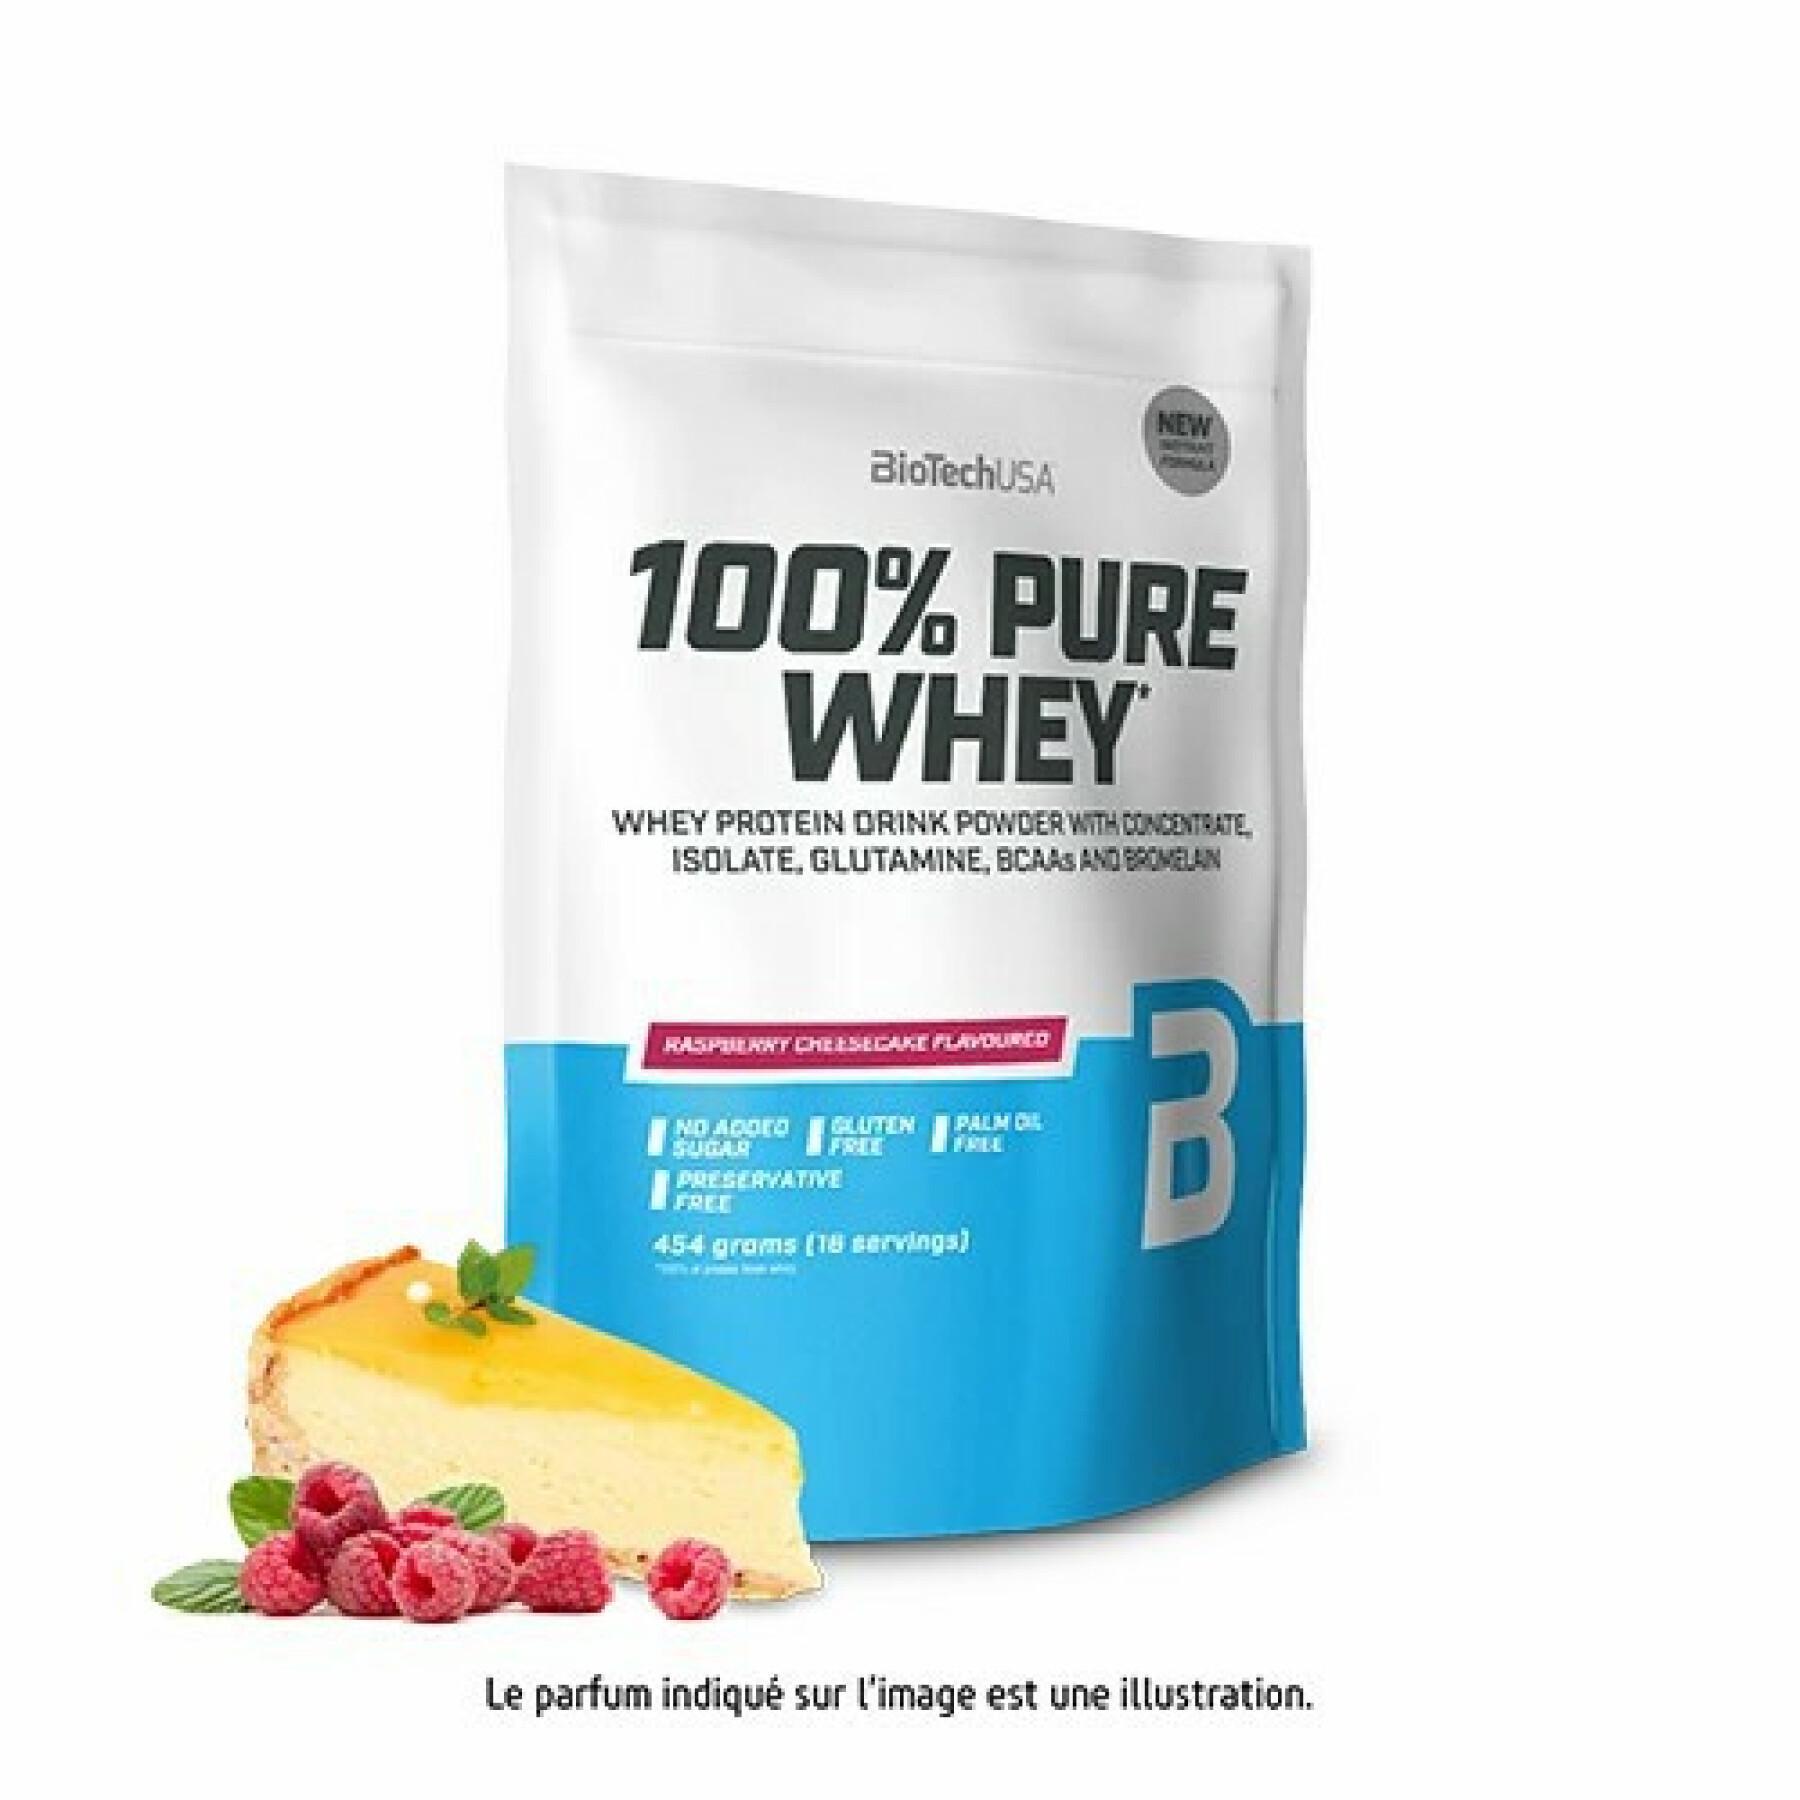 Pak van 10 zakken 100% zuivere wei-eiwitten Biotech USA - Cheesecake aux frambois - 454g